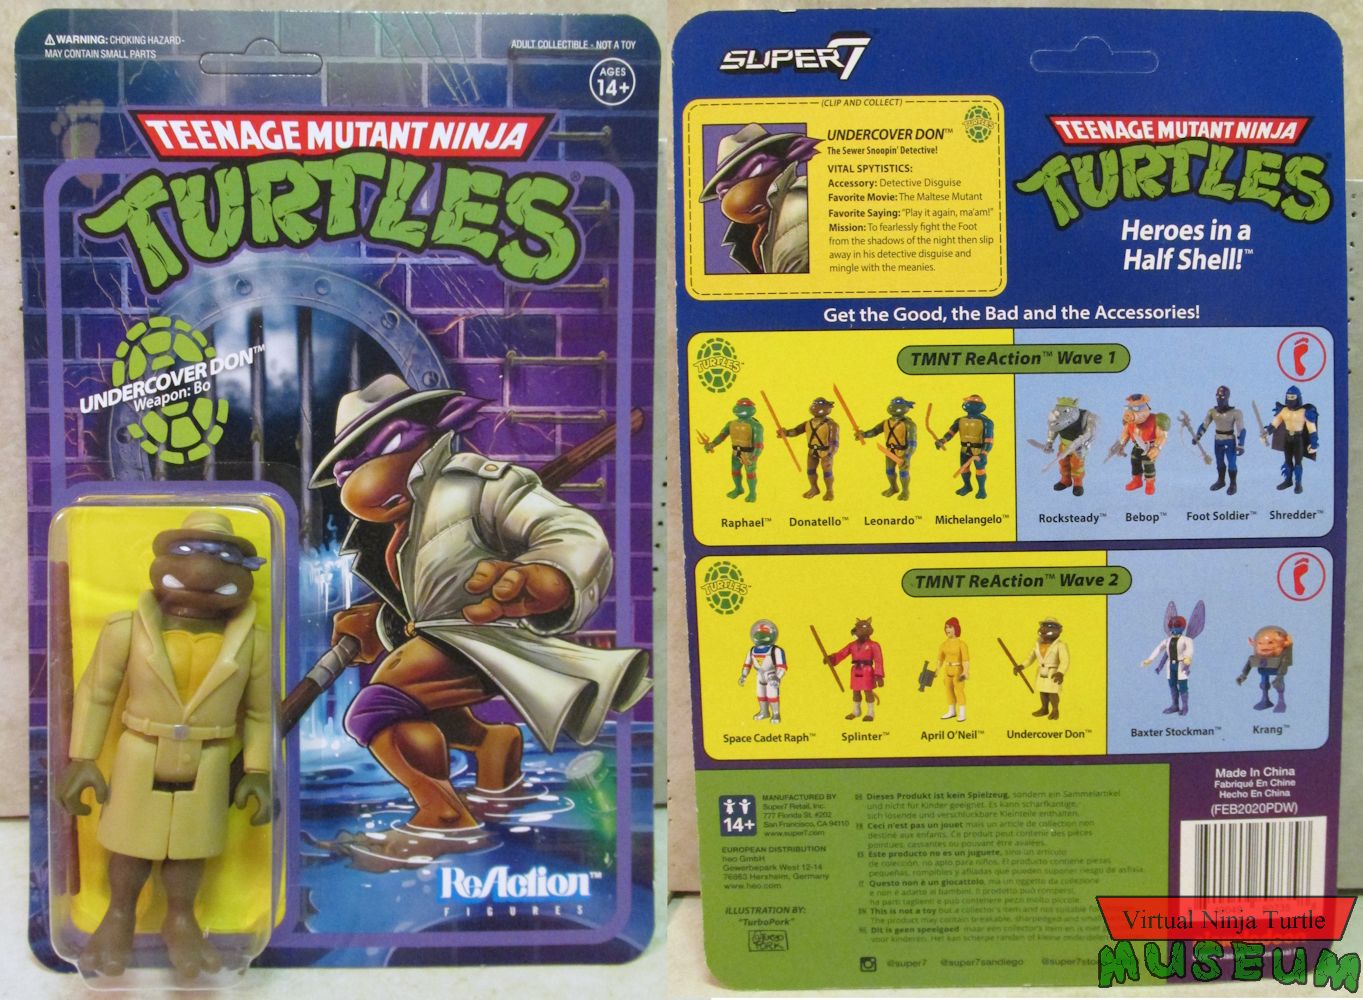 Super7 Teenage Mutant Ninja Turtles Reaction Figures Undercover Don 5636